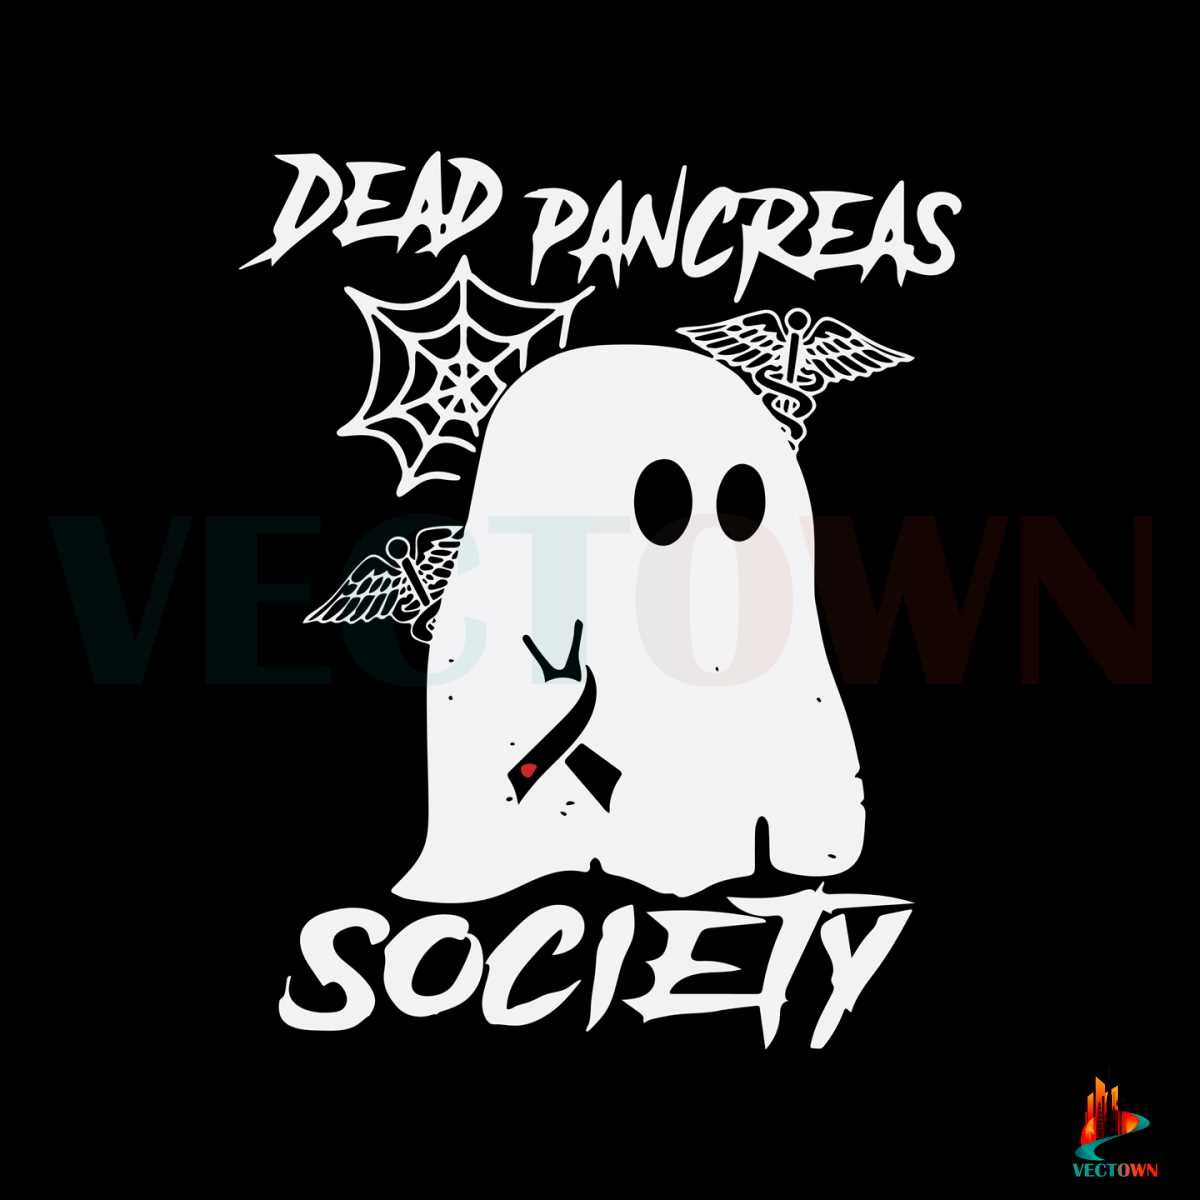 Dead pancreas society SVG Digital File, Halloween Svg, Ghost Svg